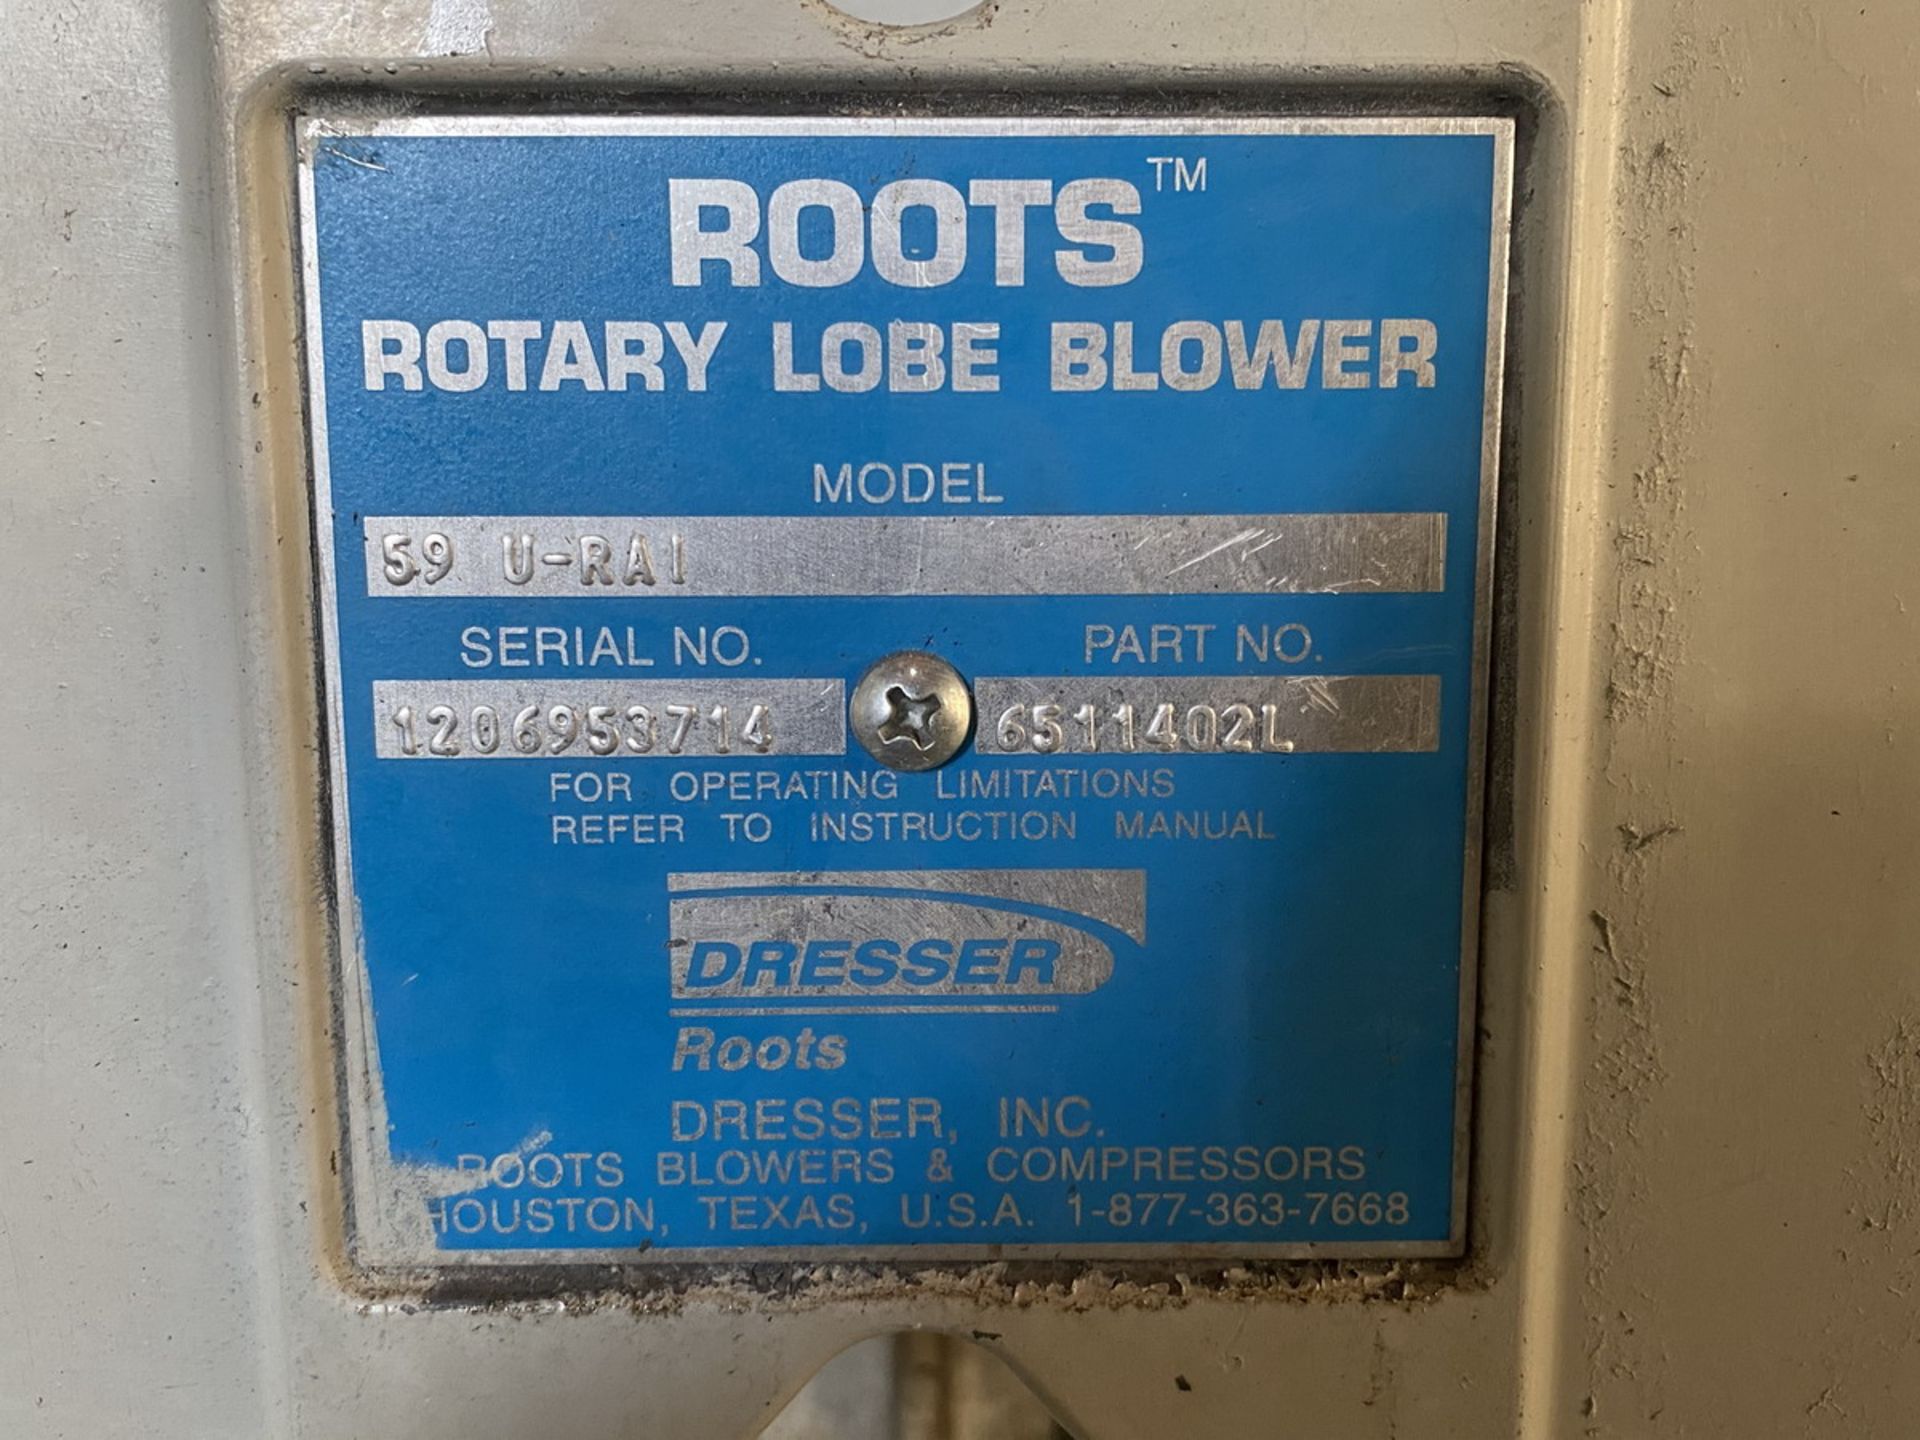 Root 25-HP Model 59 U-RAI Rotary Lobe Blower, S/N: 1206953714; with Silencer, Weg Invert Duty - Image 6 of 6